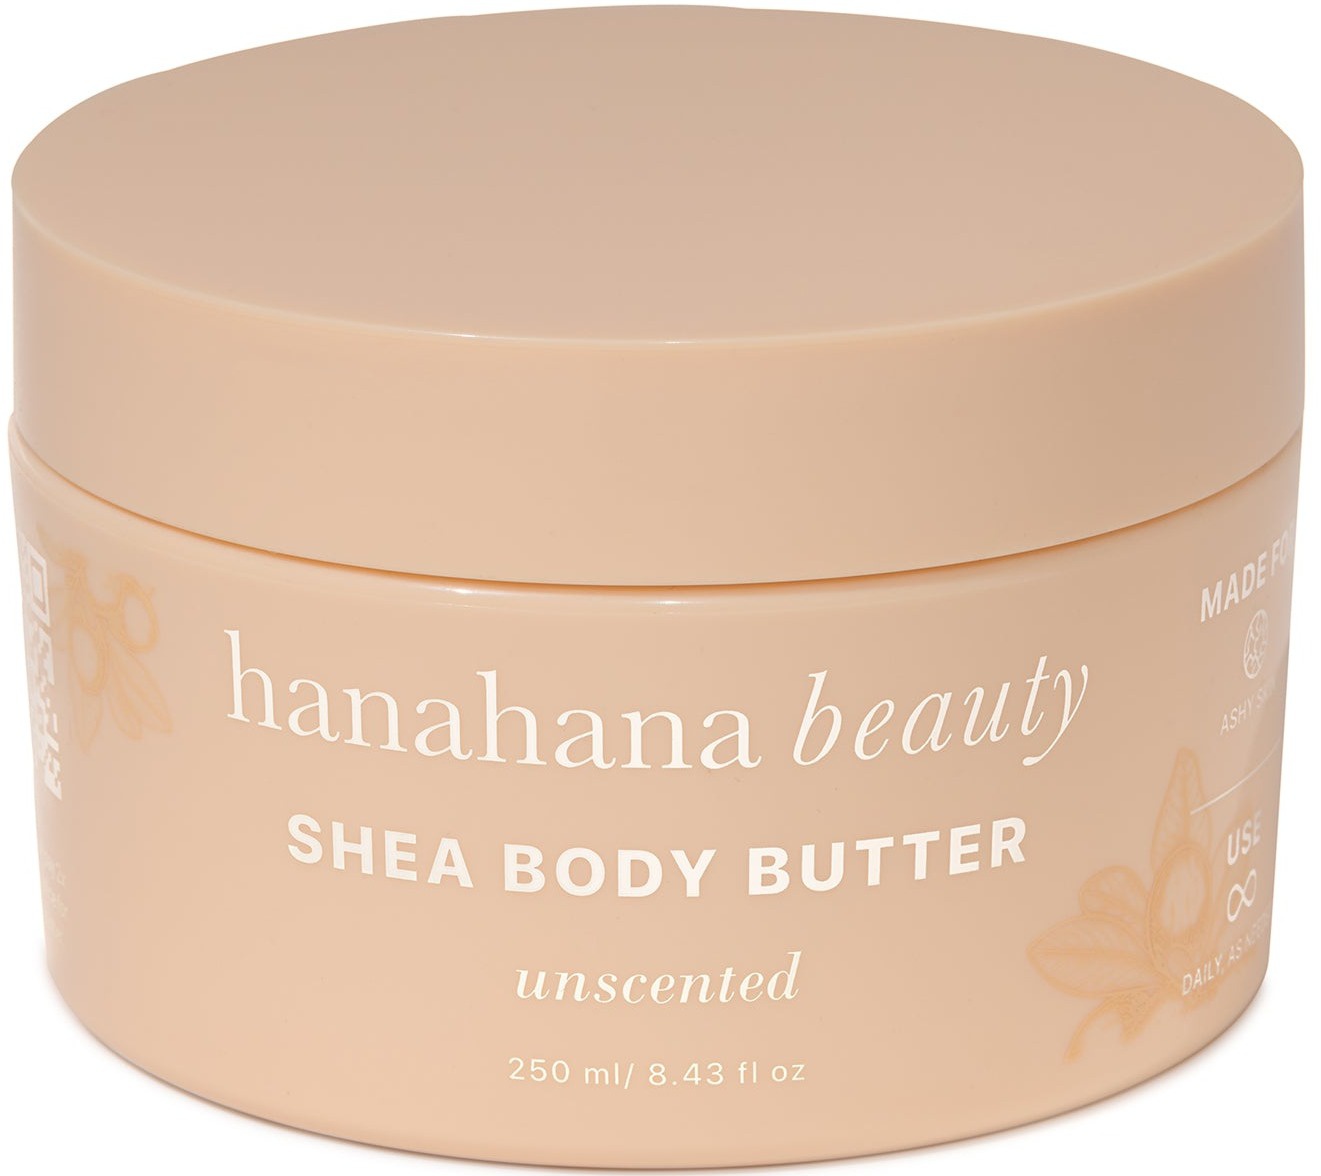 hanahana beauty Unscented Shea Body Butter